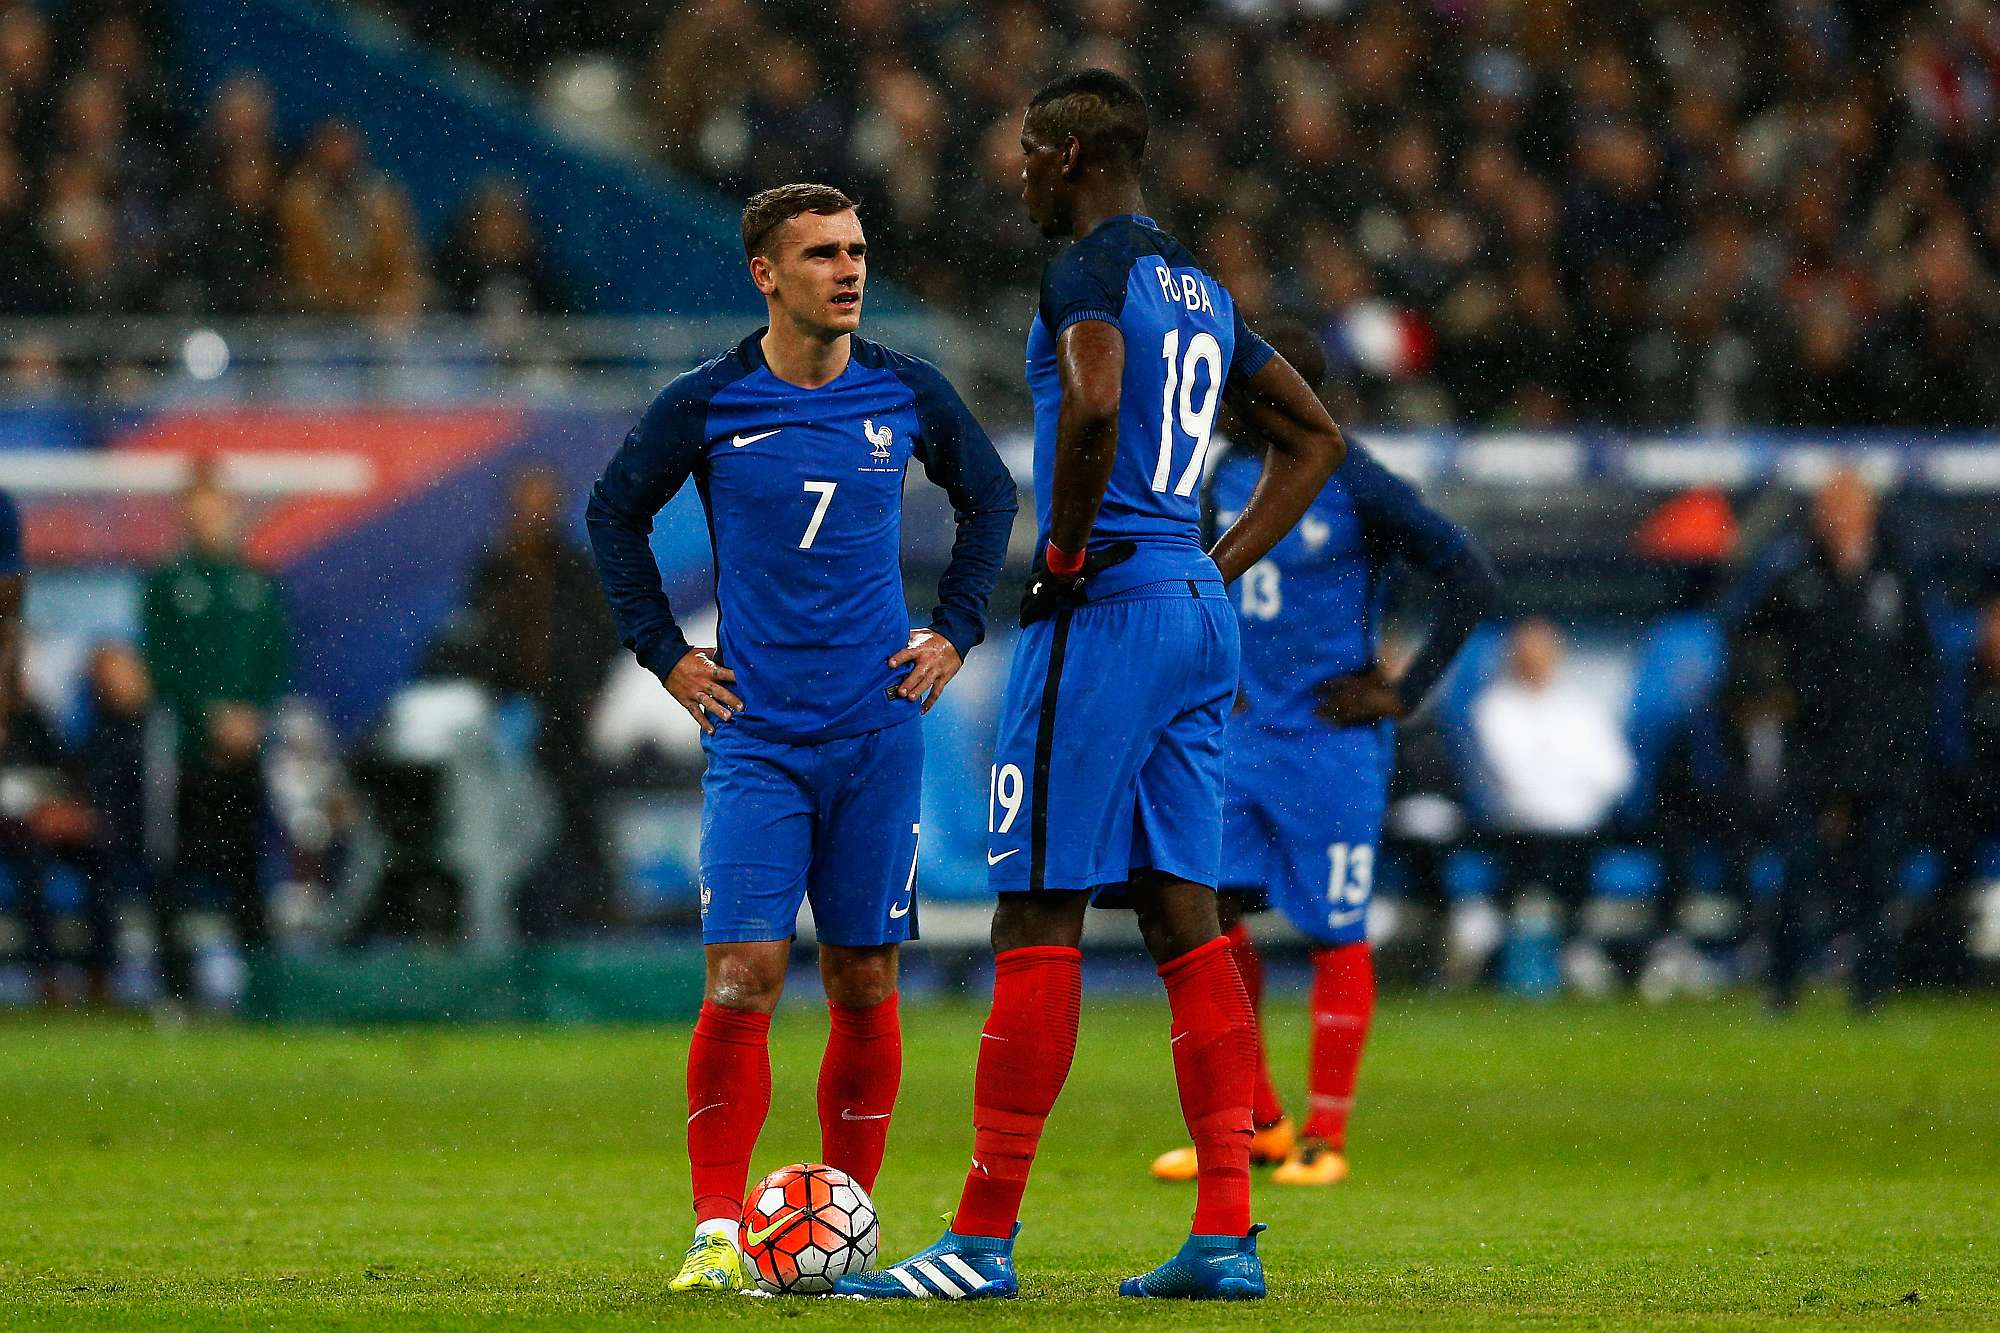 Euro 2016, anteprima Francia-Islanda: news, pronostici e quote